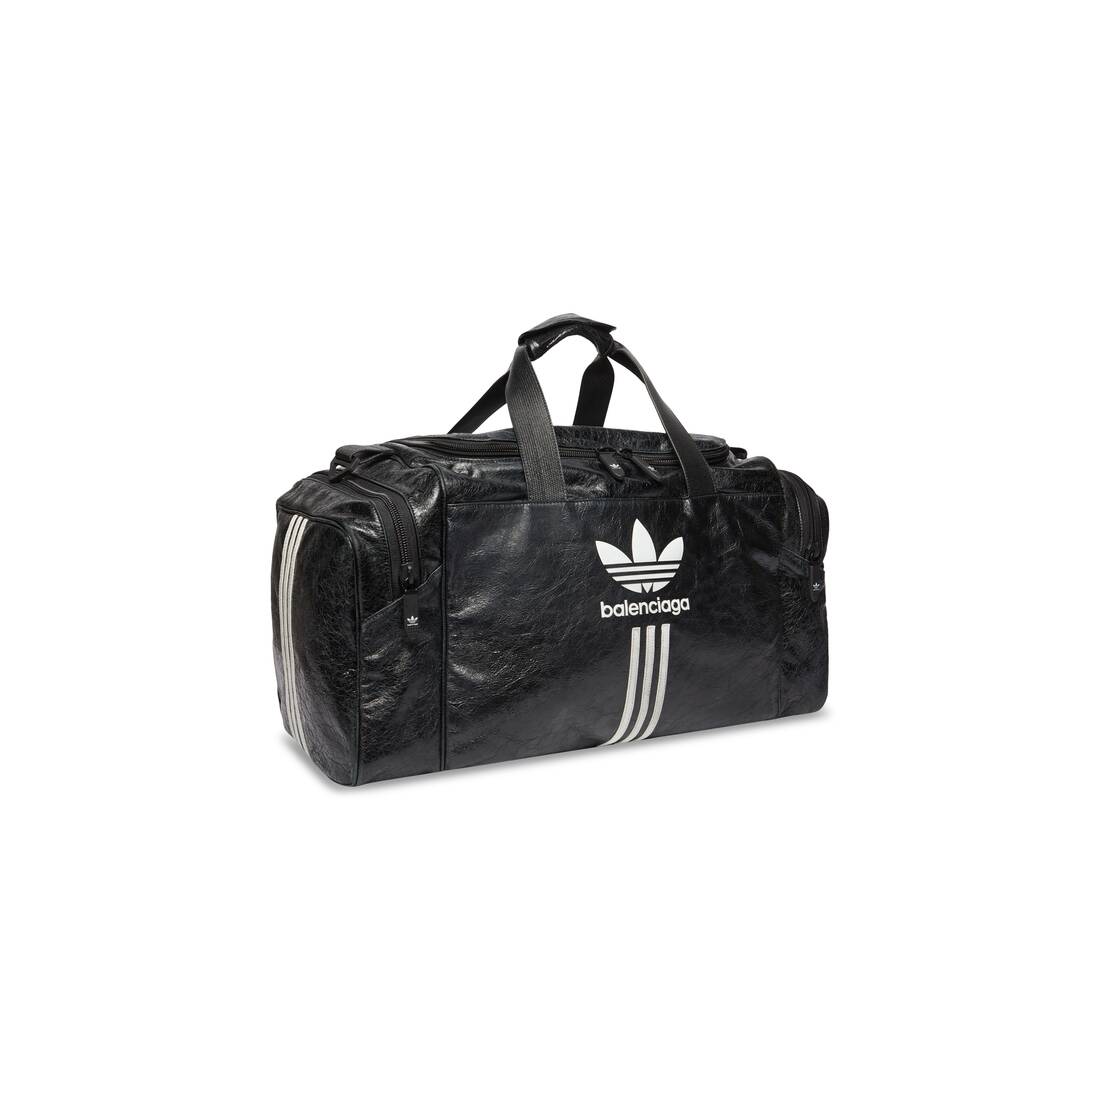 New Balenciaga Backpack Gym Sack Dust Bag 19x14  eBay